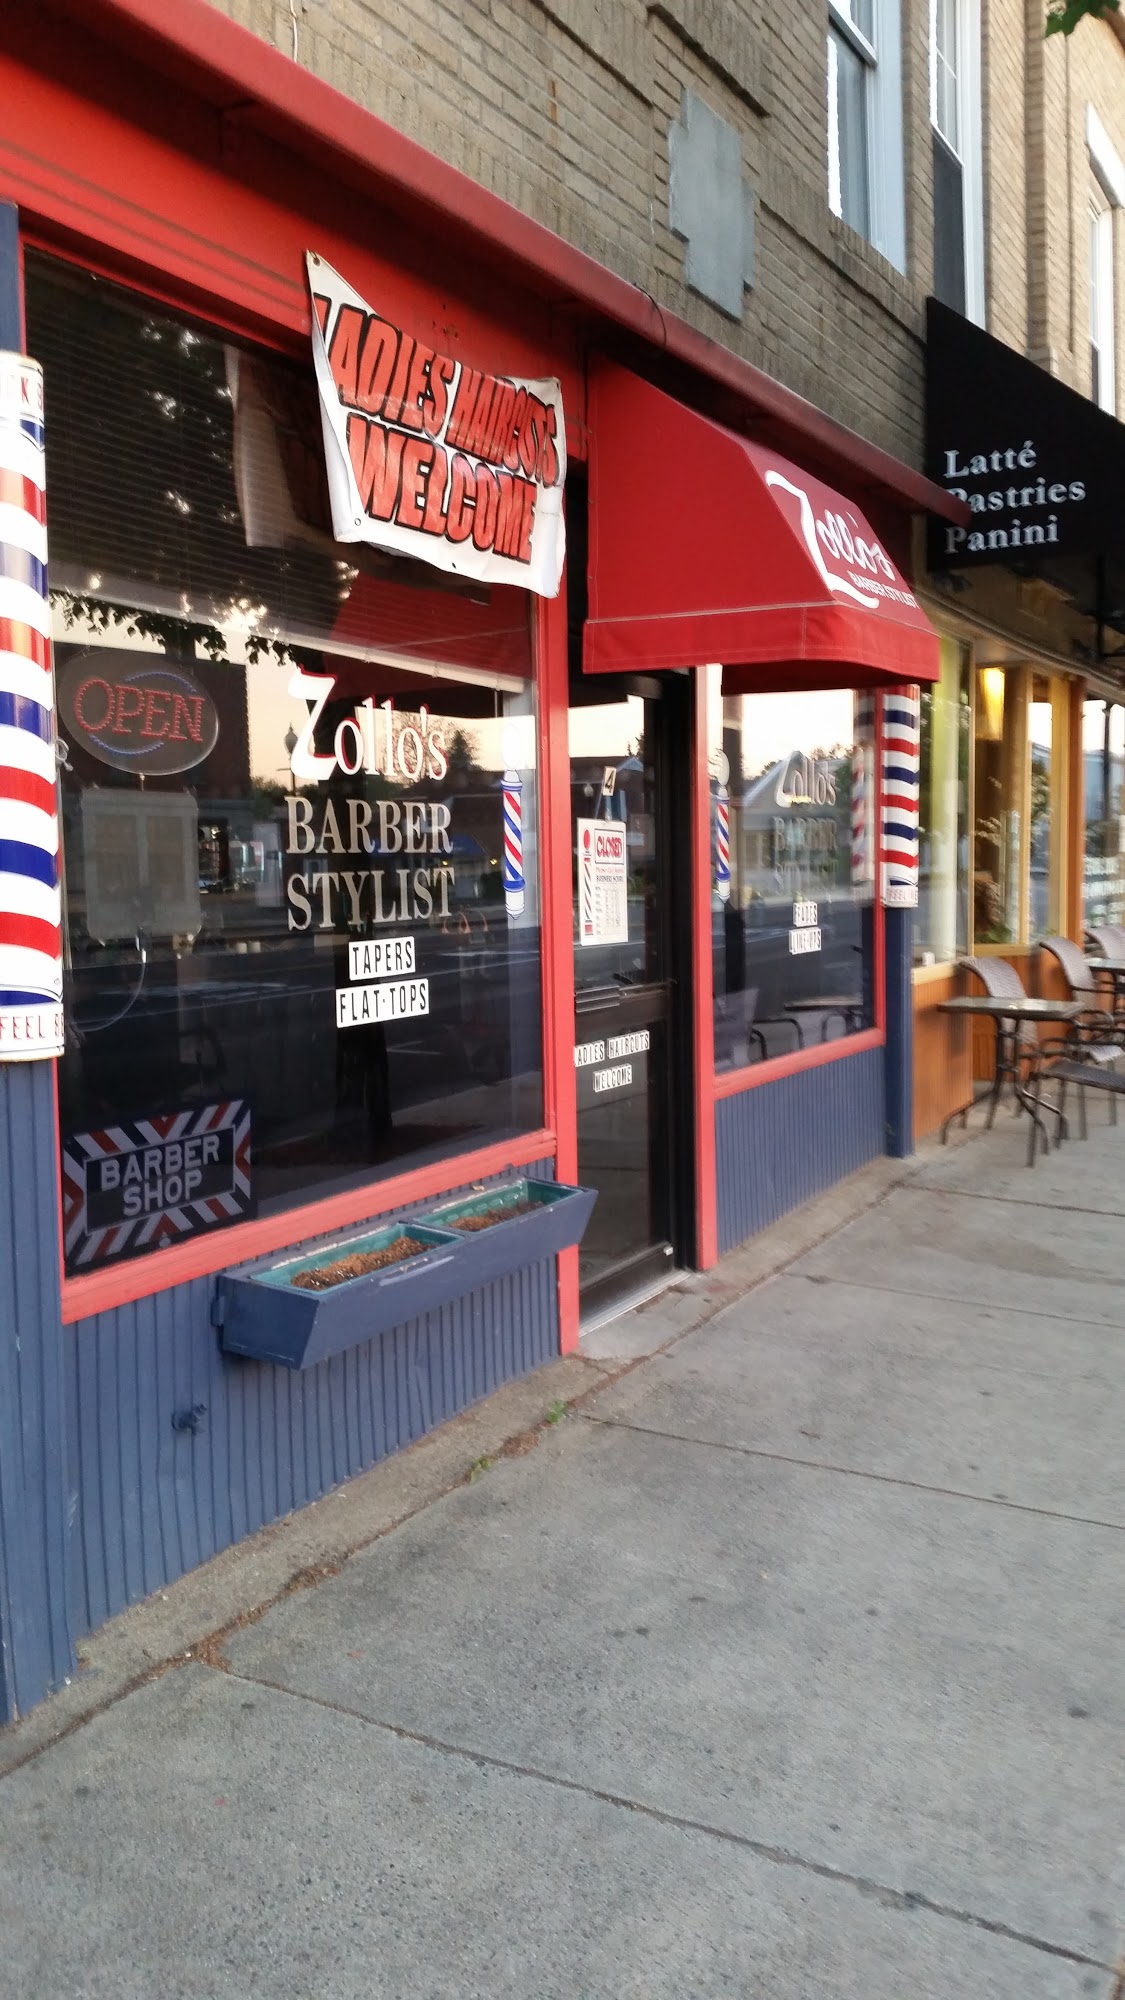 Zollo's Barber Shop